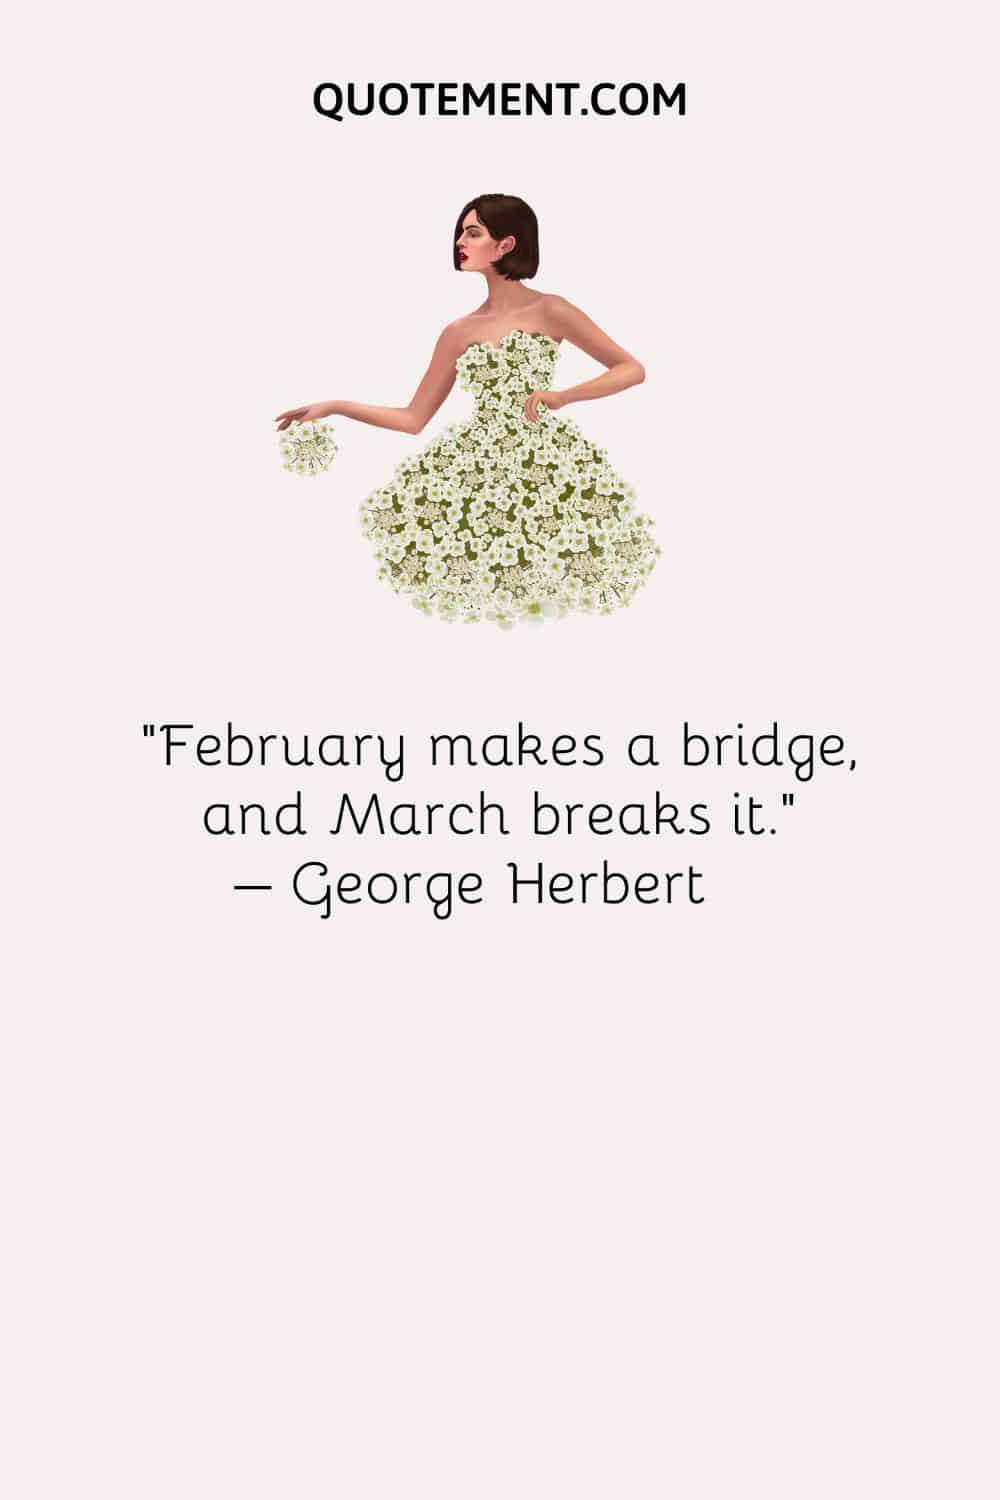 February makes a bridge, and March breaks it. – George Herbert